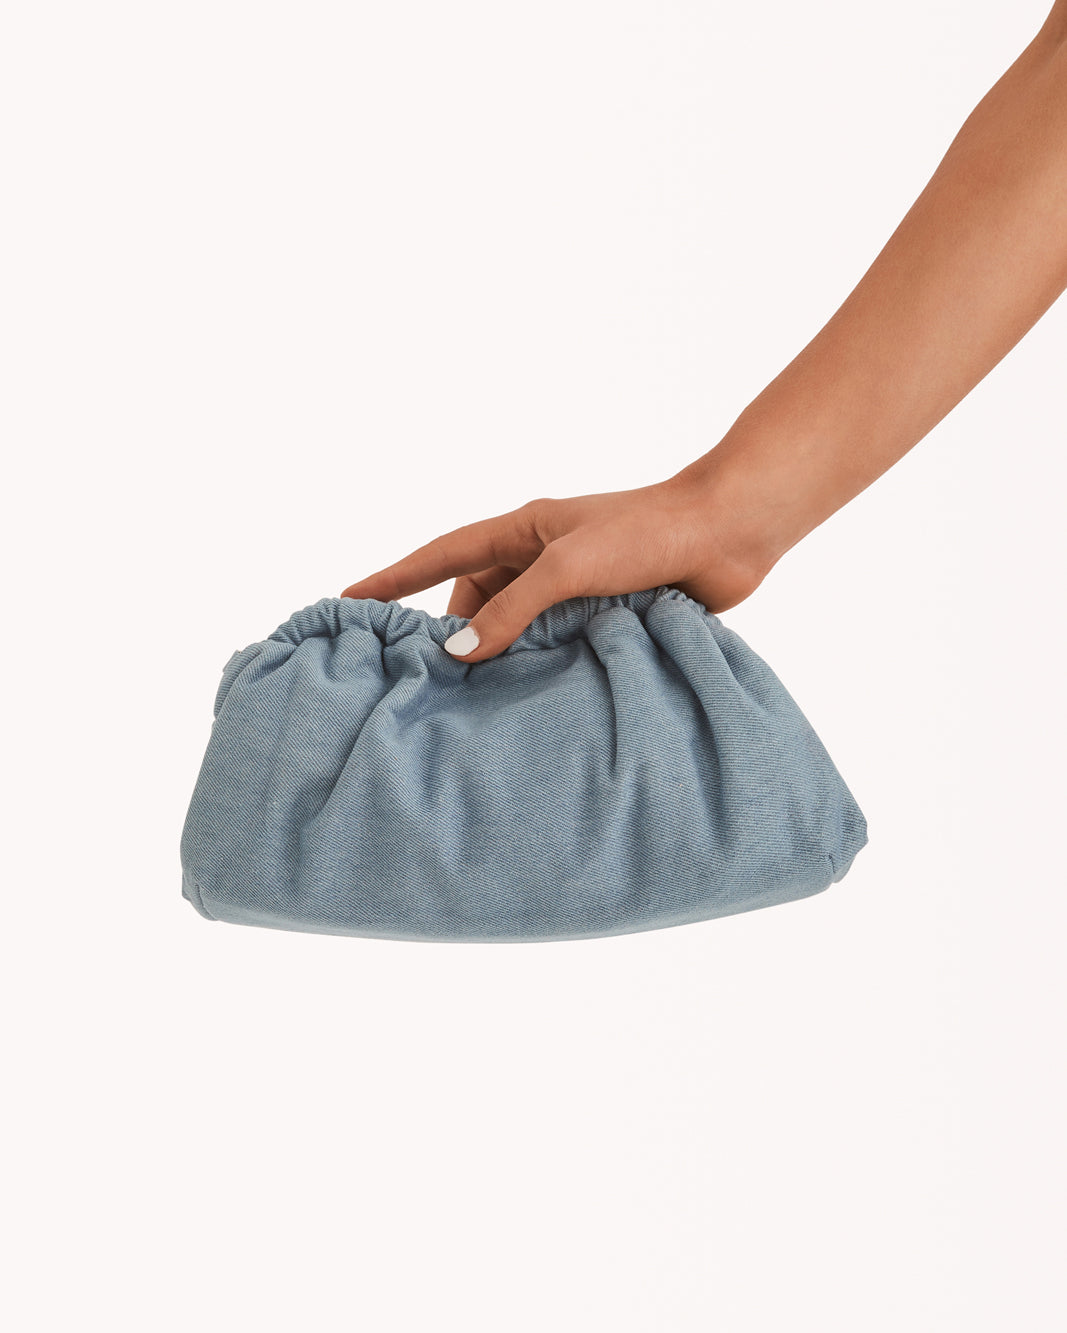 MISCHA CROSS BODY BAG - BLUE DENIM-Handbags-Billini-O/S-Billini